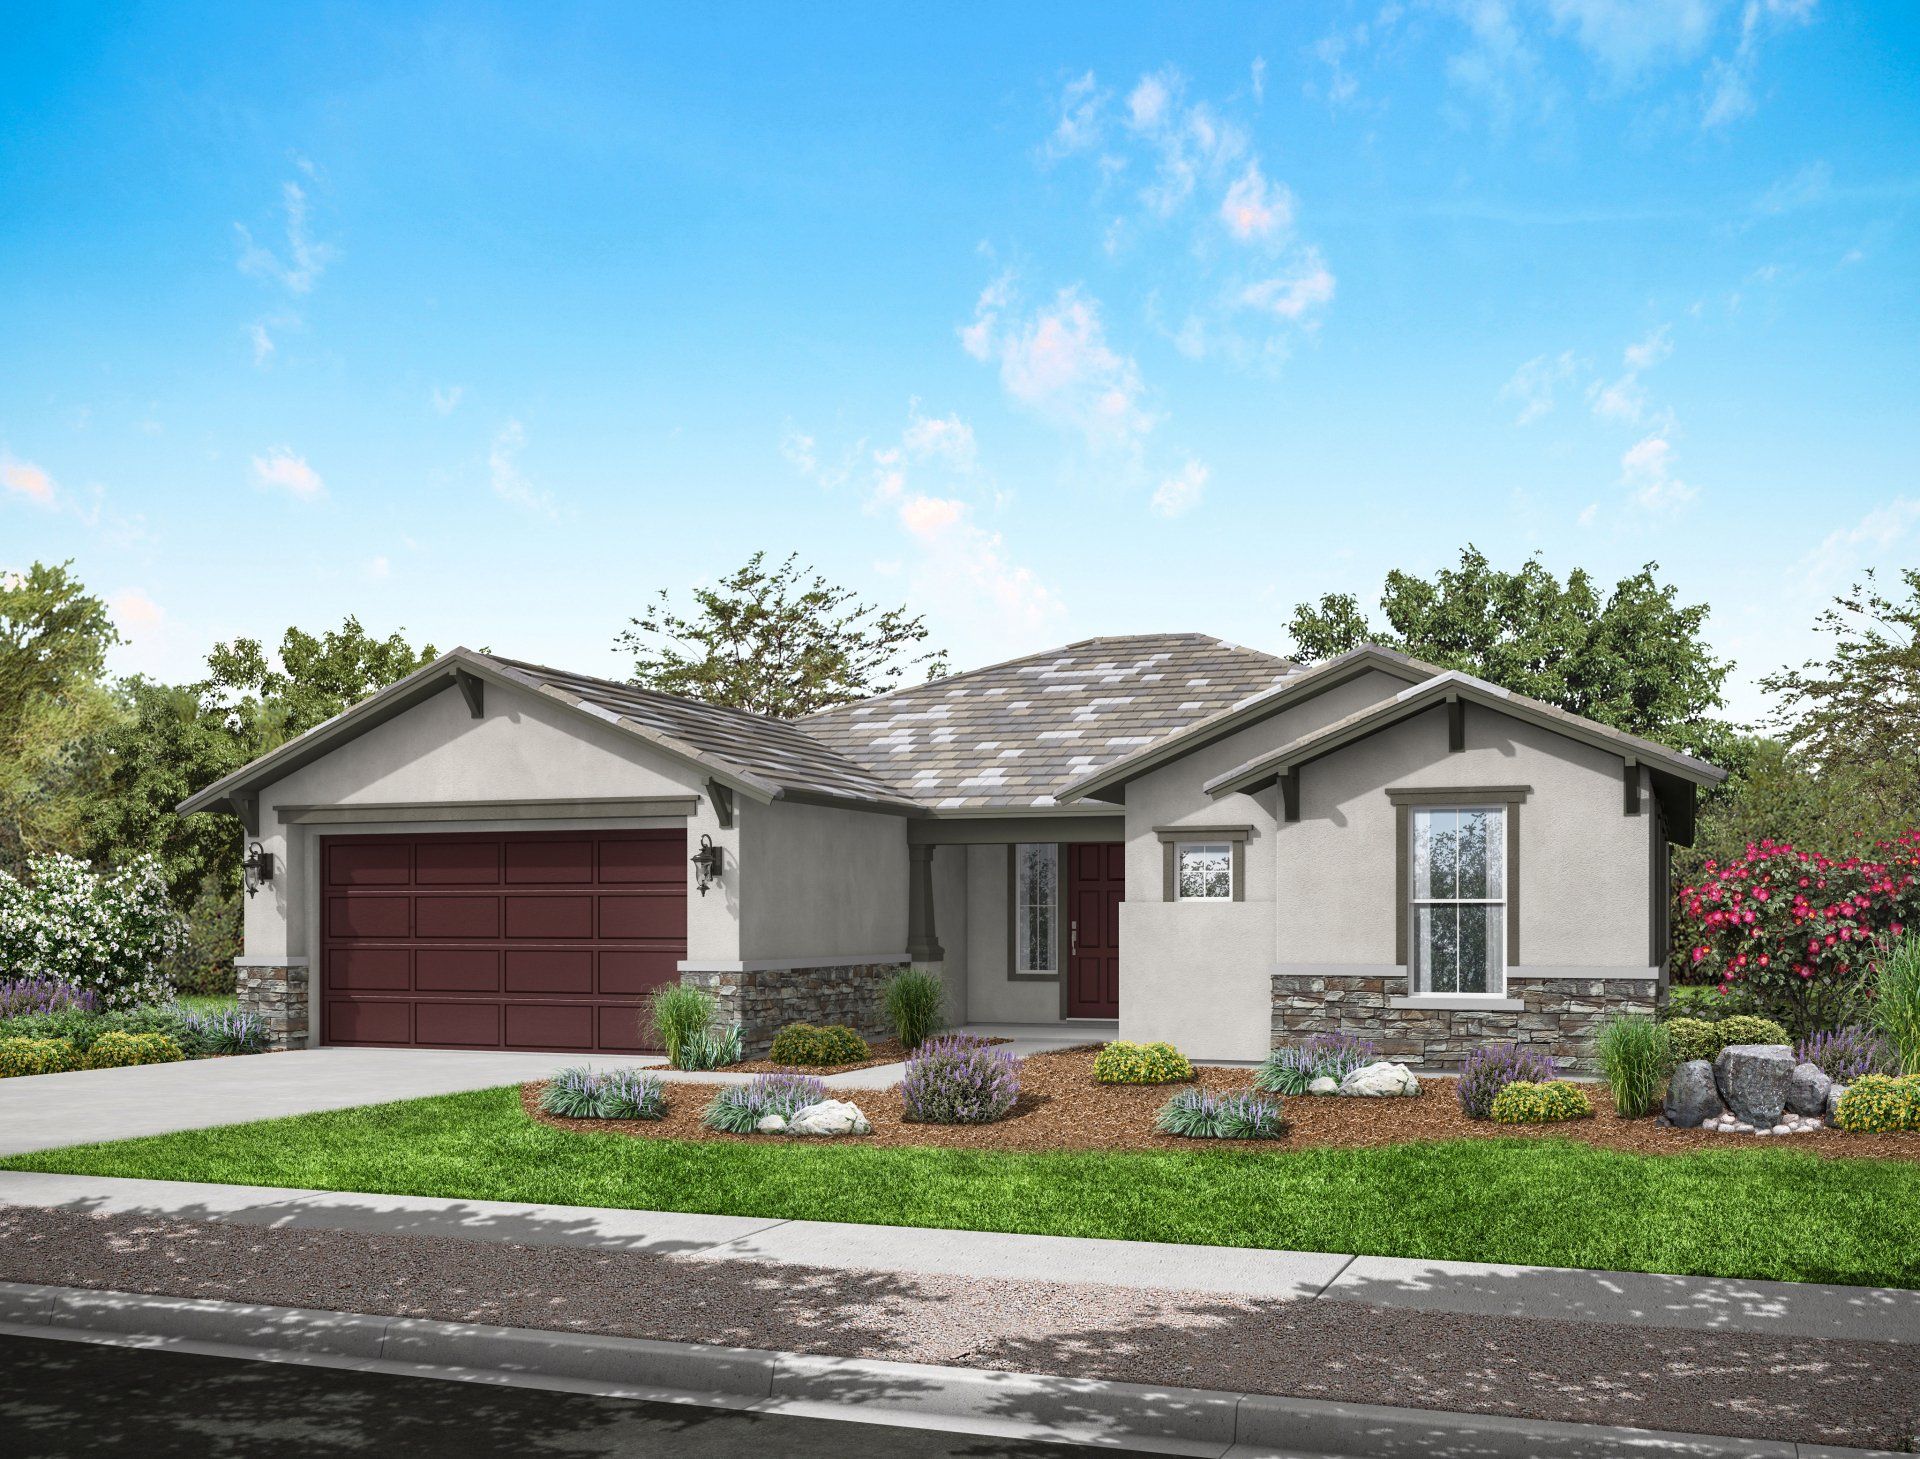 Elevation A Plan 2 | SCM Homes | Modesto, CA